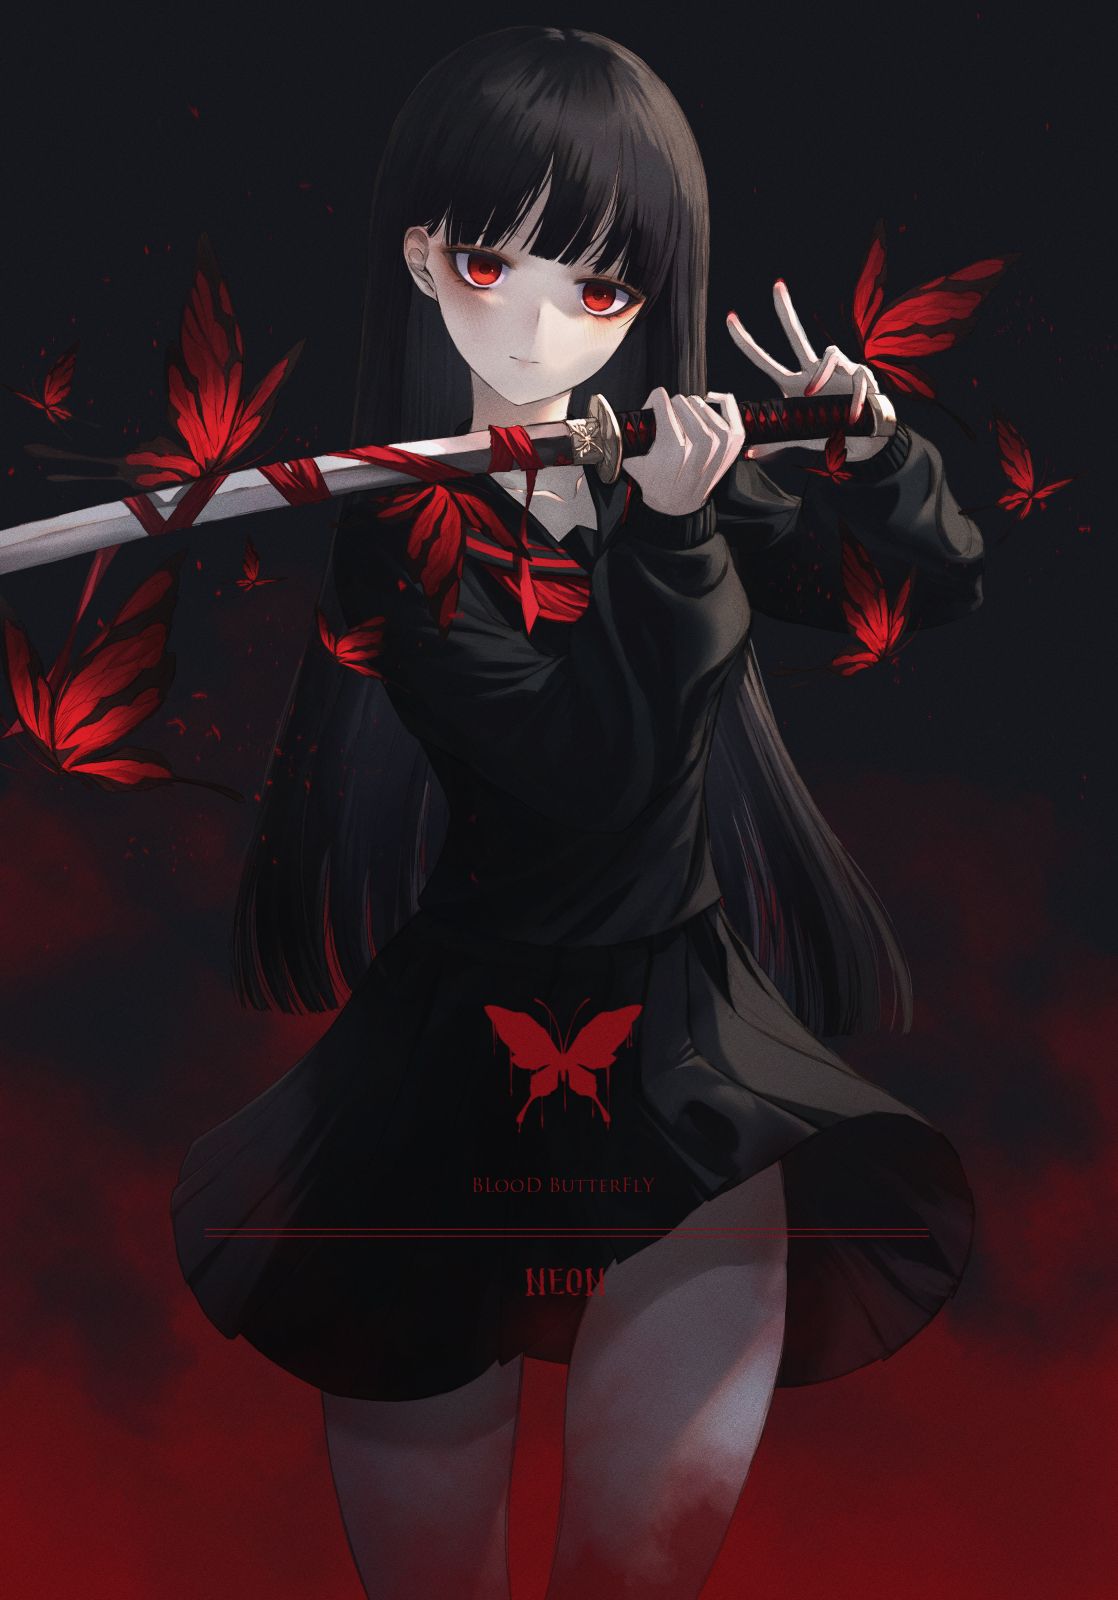 Yandere girl with katana: Anime OC pic: Original anime characters (Artist: Neon (pixiv 31150749))